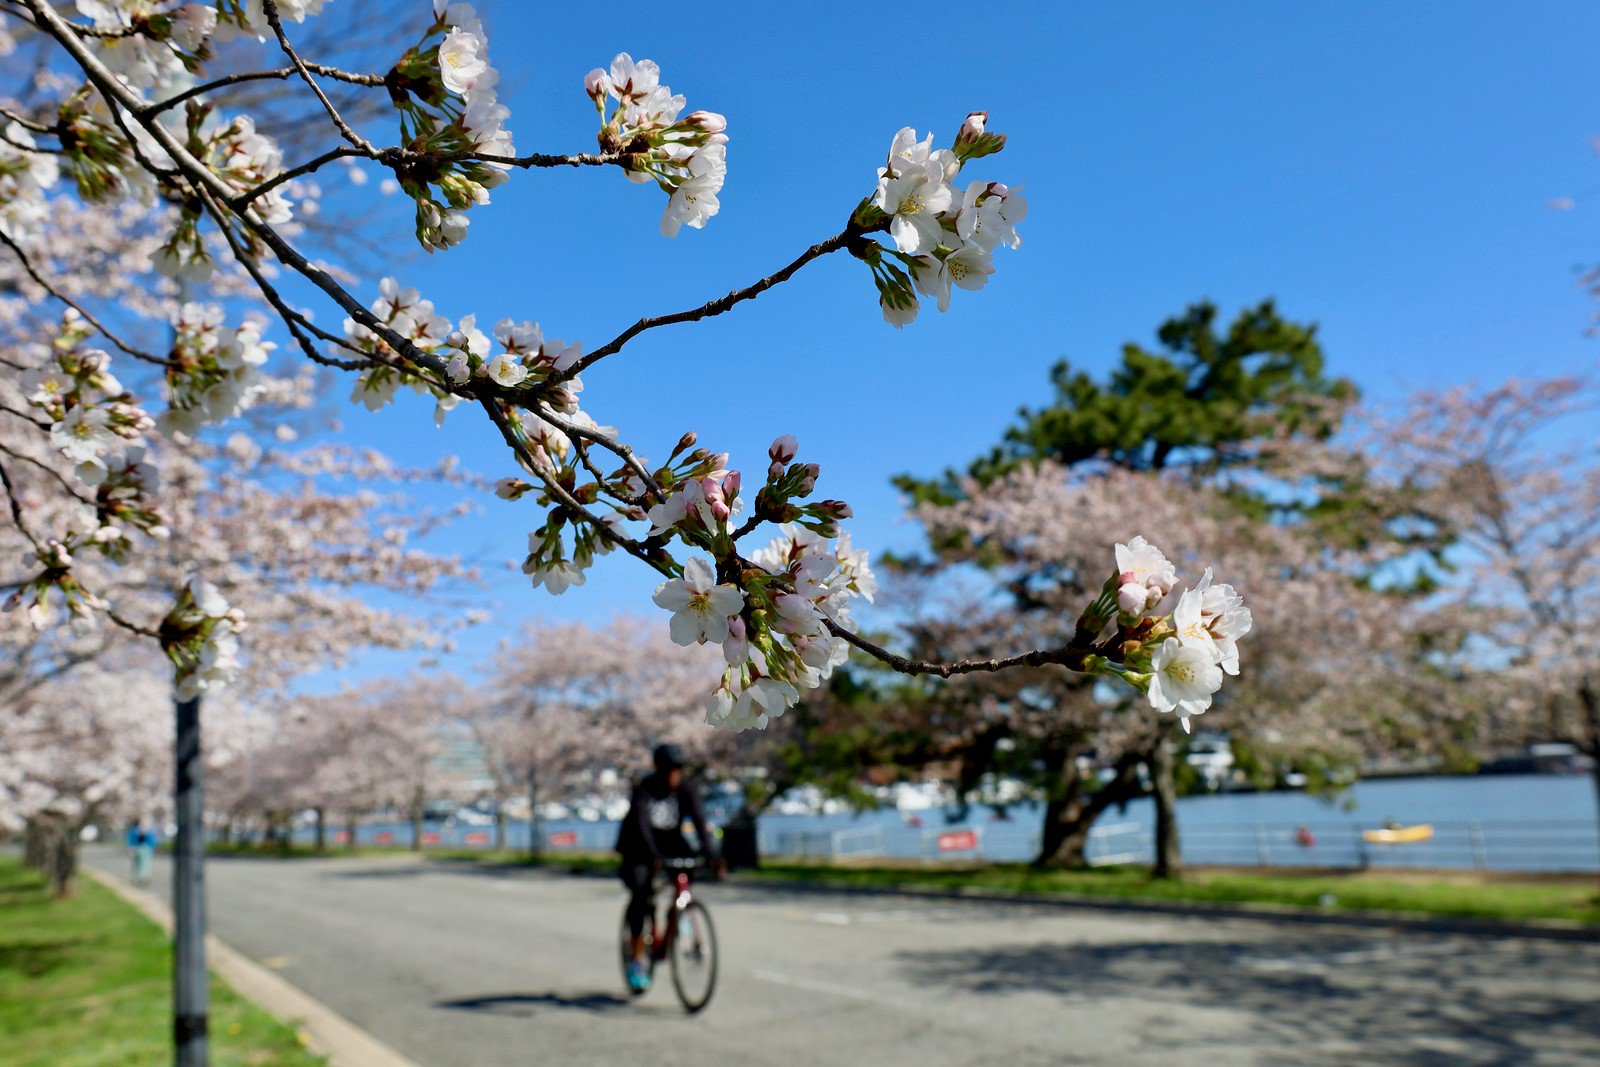 Biking among the blossoms Joe Flood Flickr